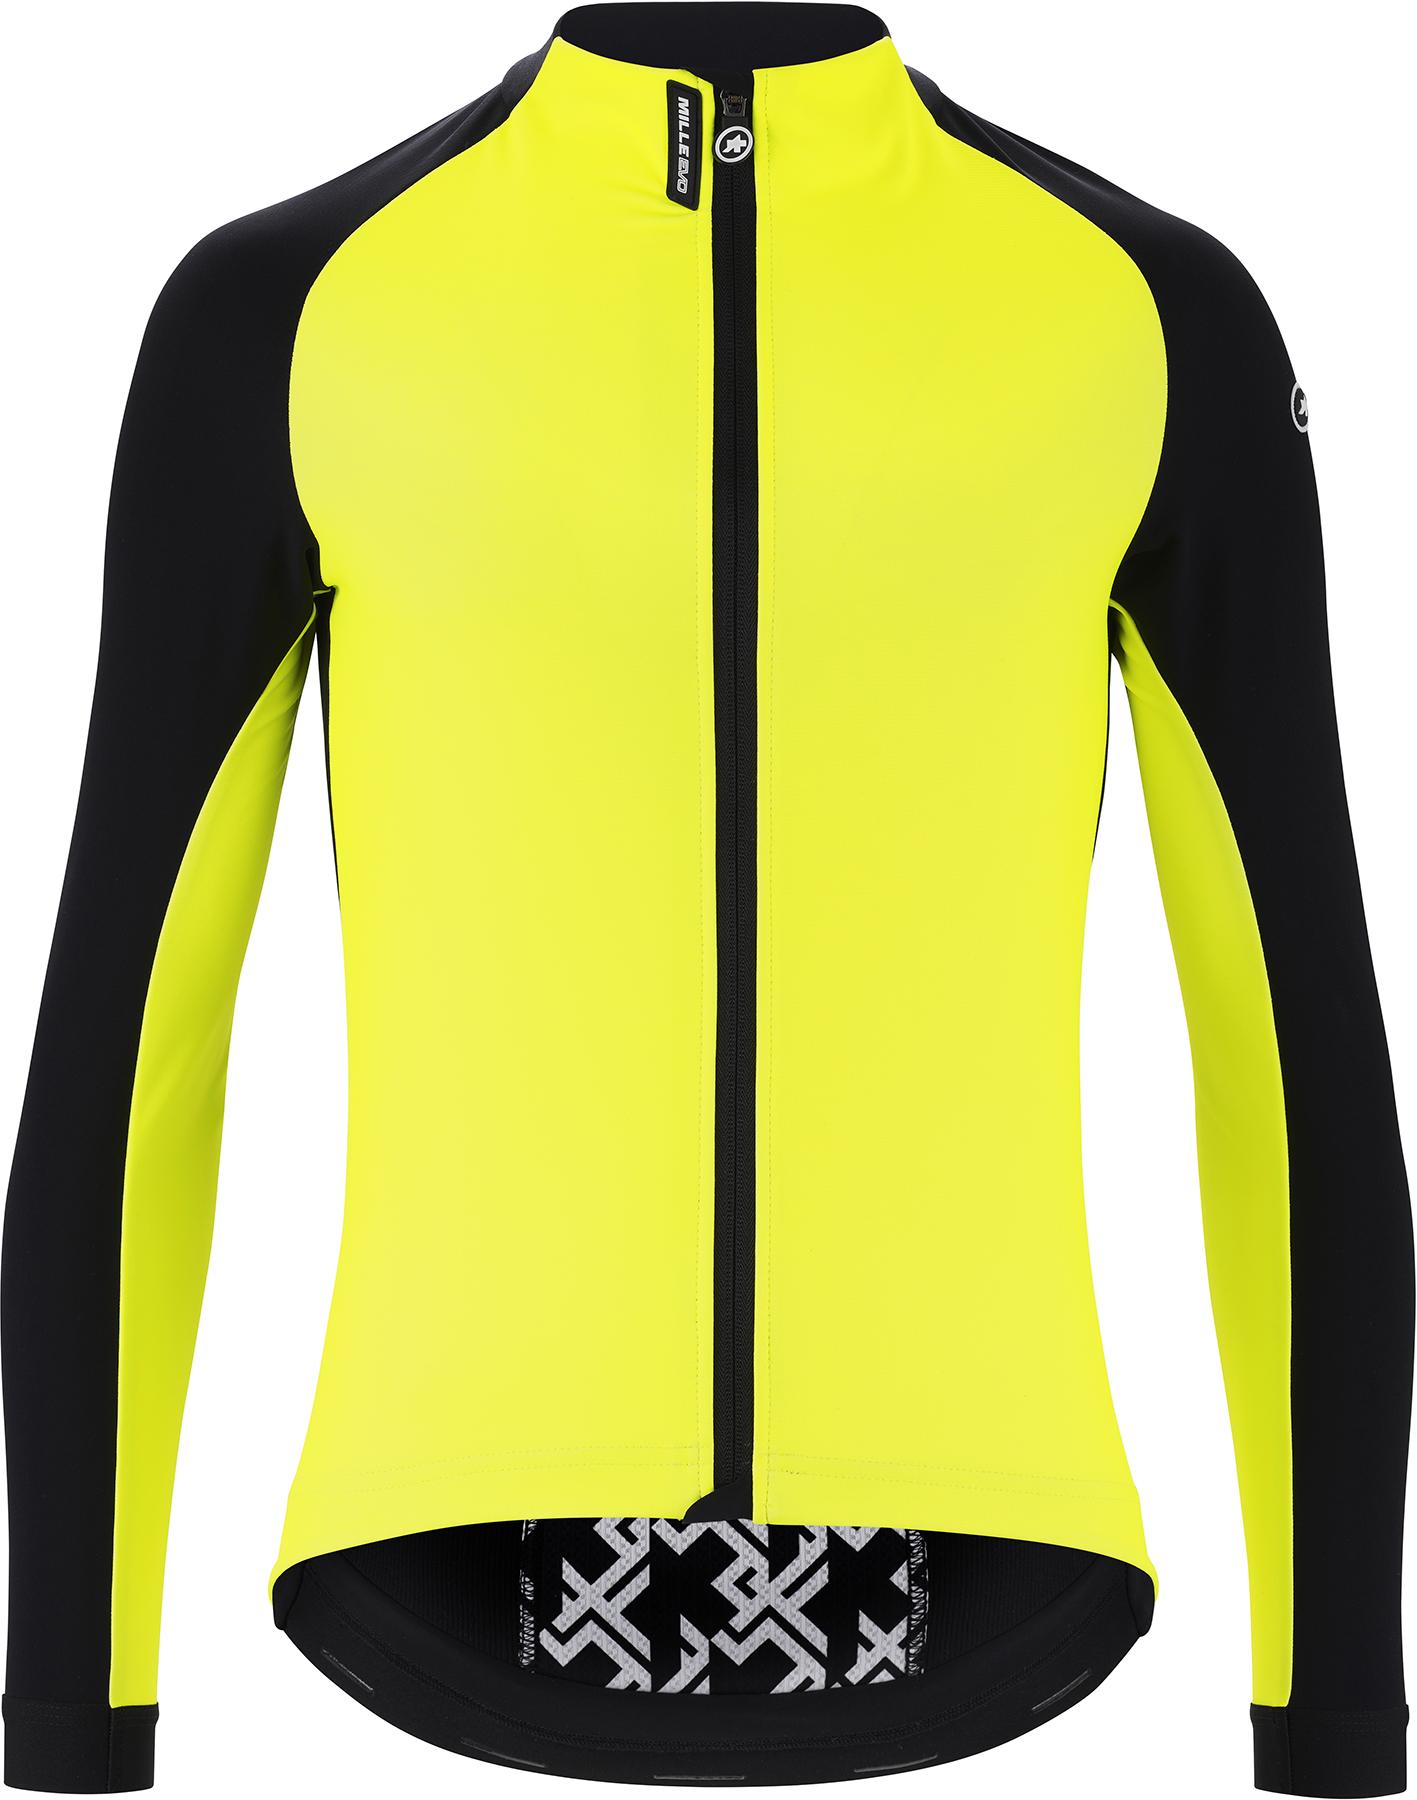 Assos Mille Gt Winter Jacket Evo  Fluorescent Yellow